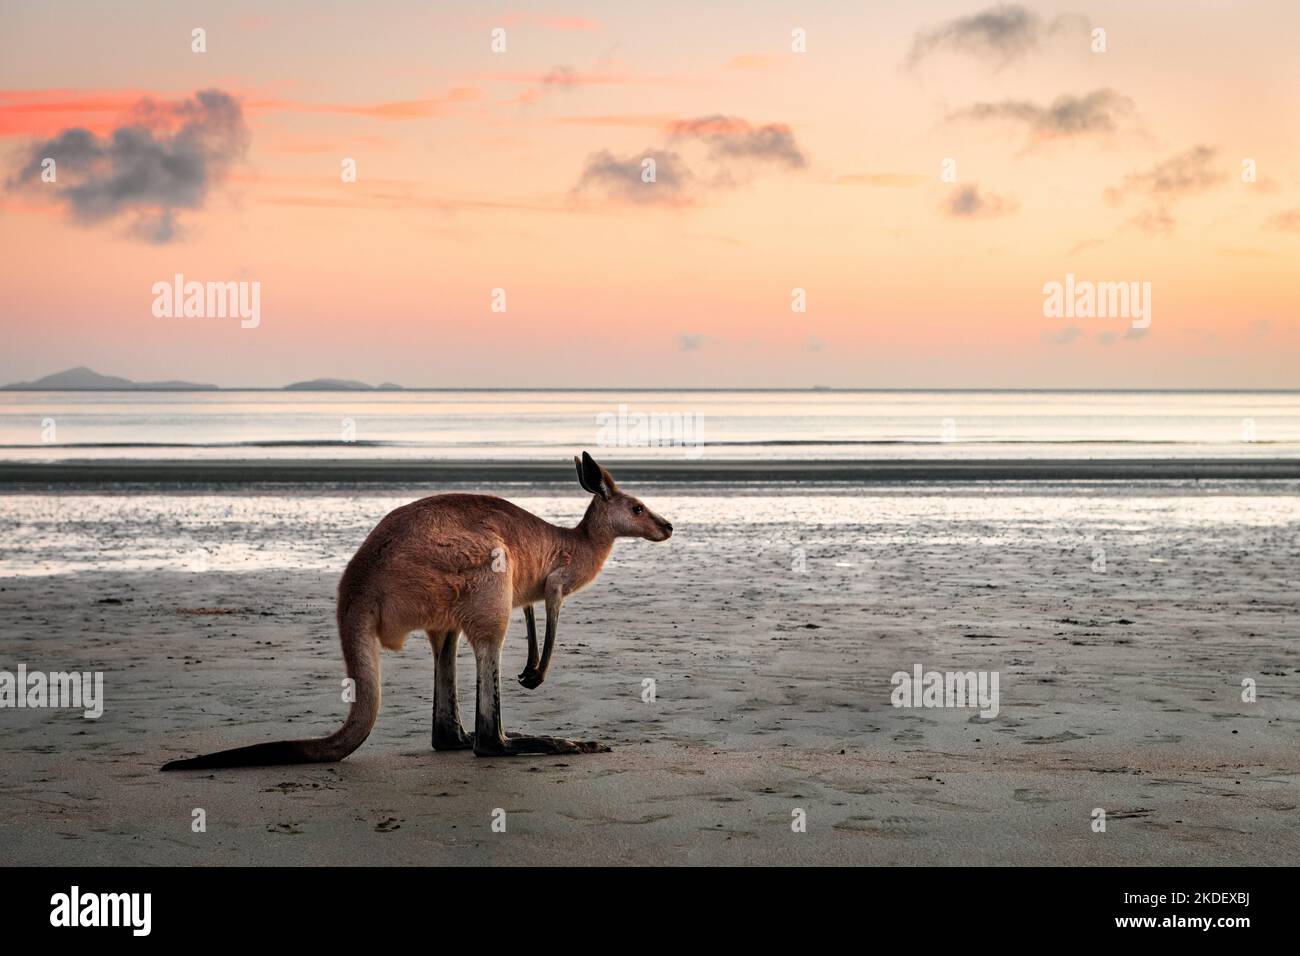 Kangaroo roaming the beach in the early morning. Stock Photo